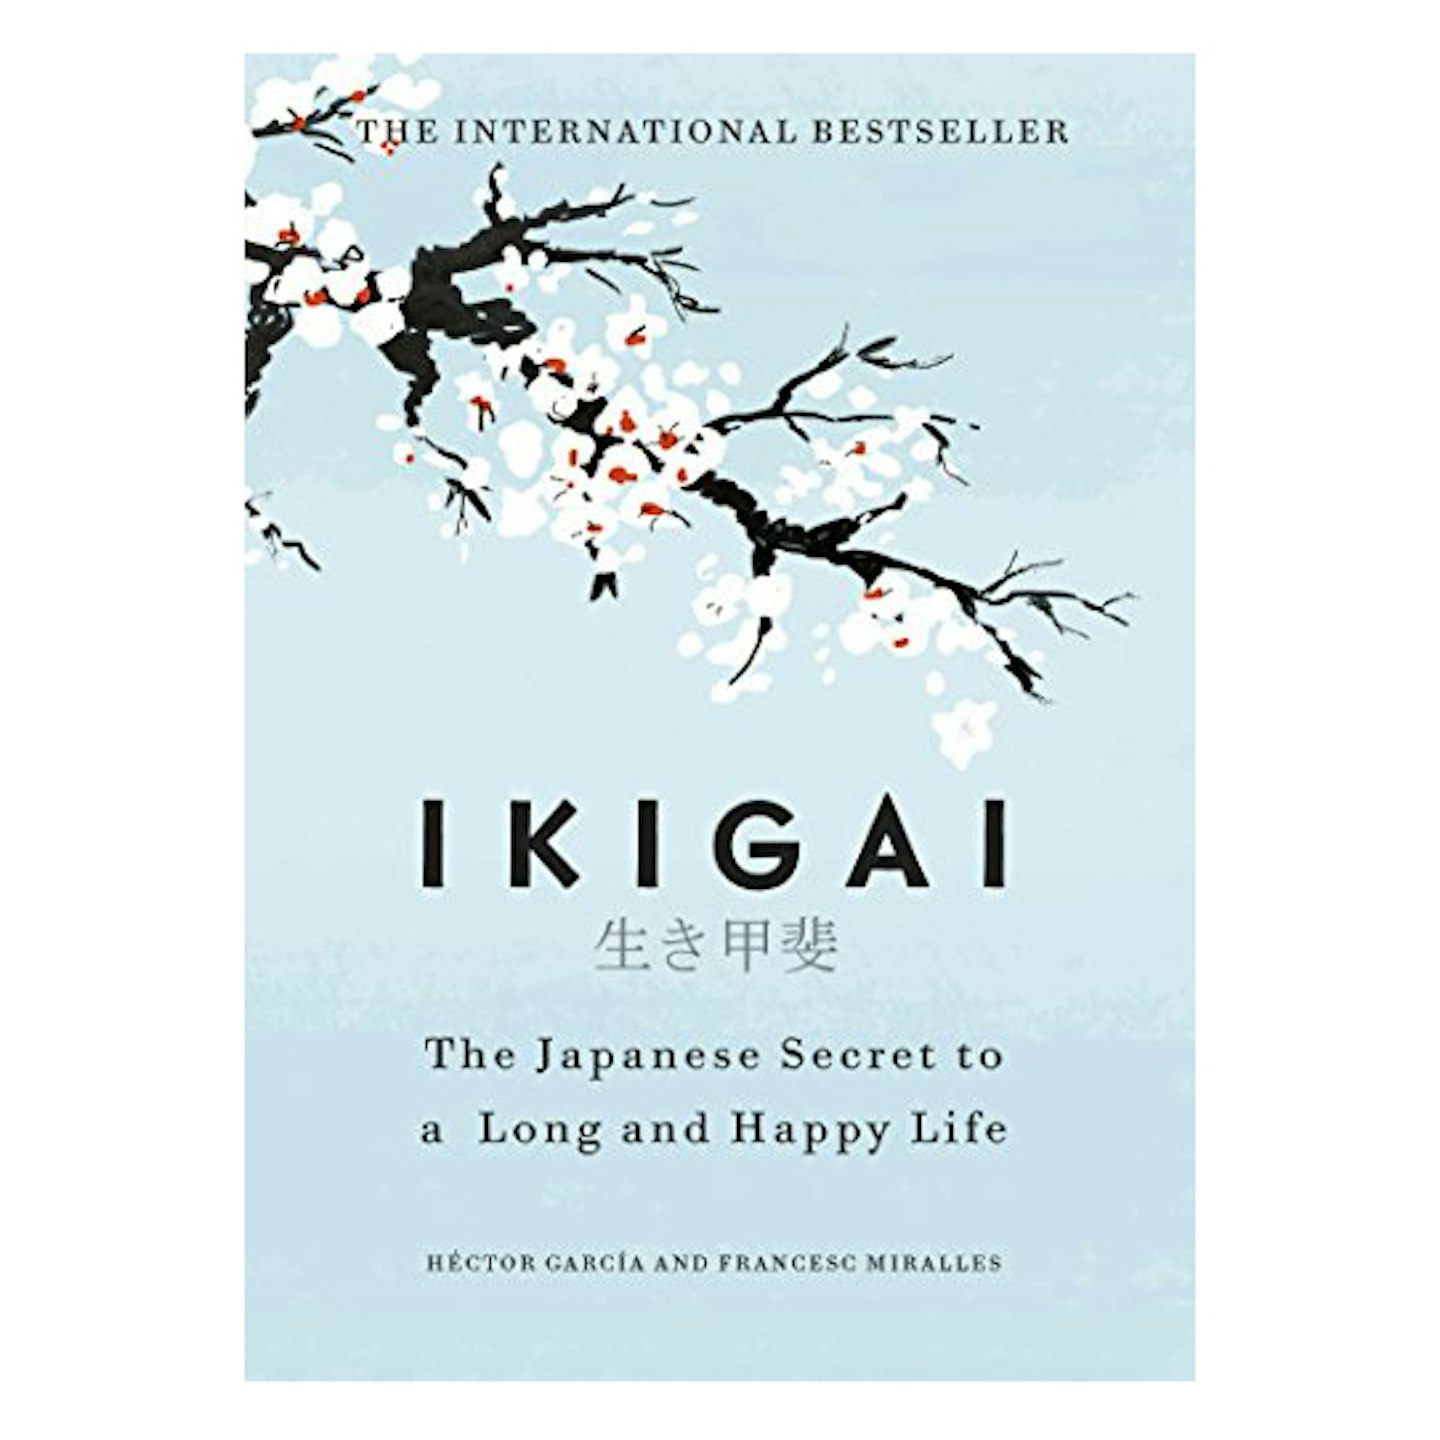 Ikigai: The Japanese secret to a long and happy life by Hu00e9ctor Garcu00eda  and Francesc Miralles